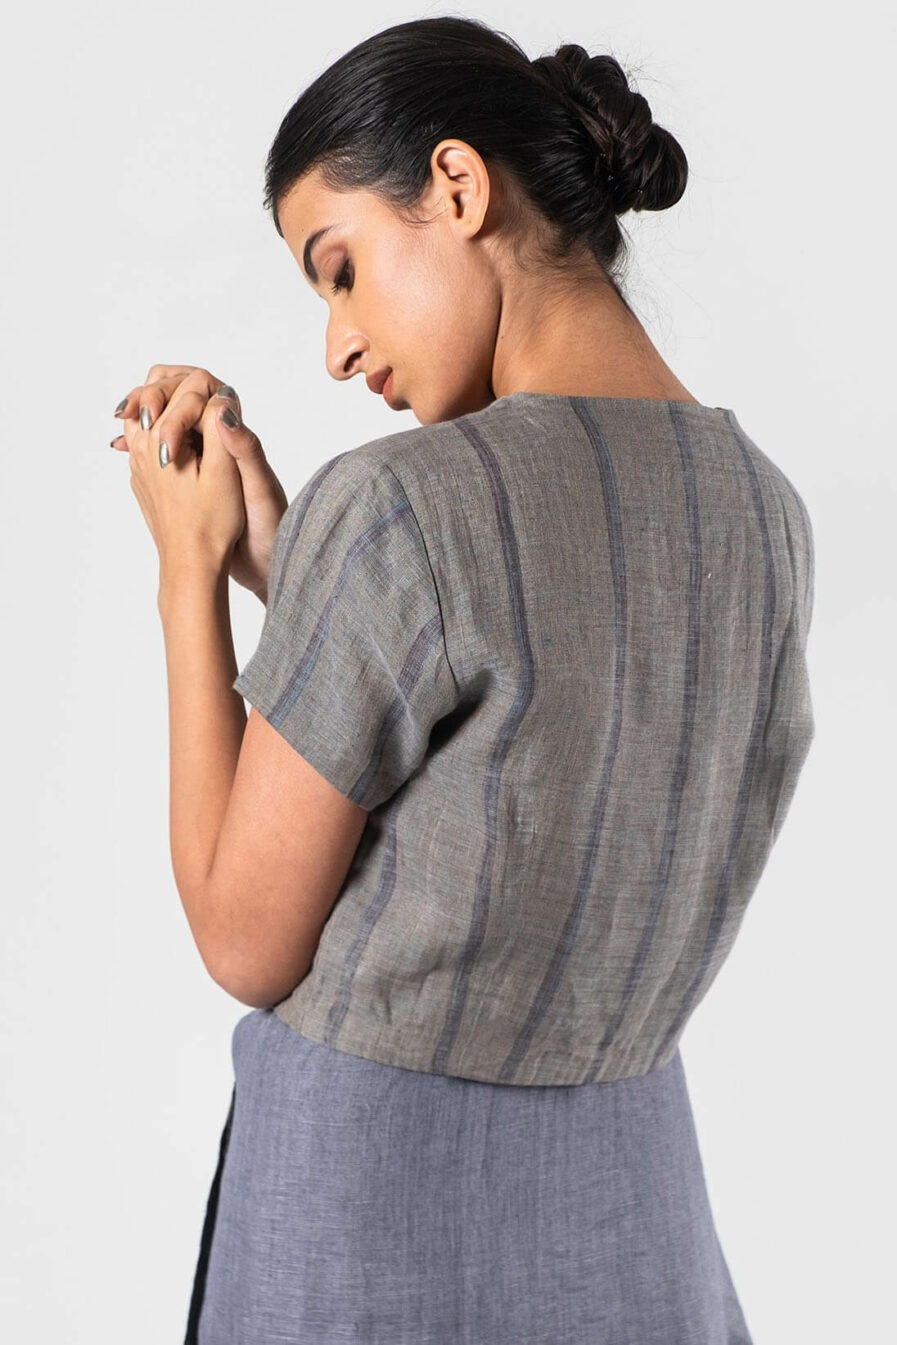 Anavila Grey Linen striped blouse